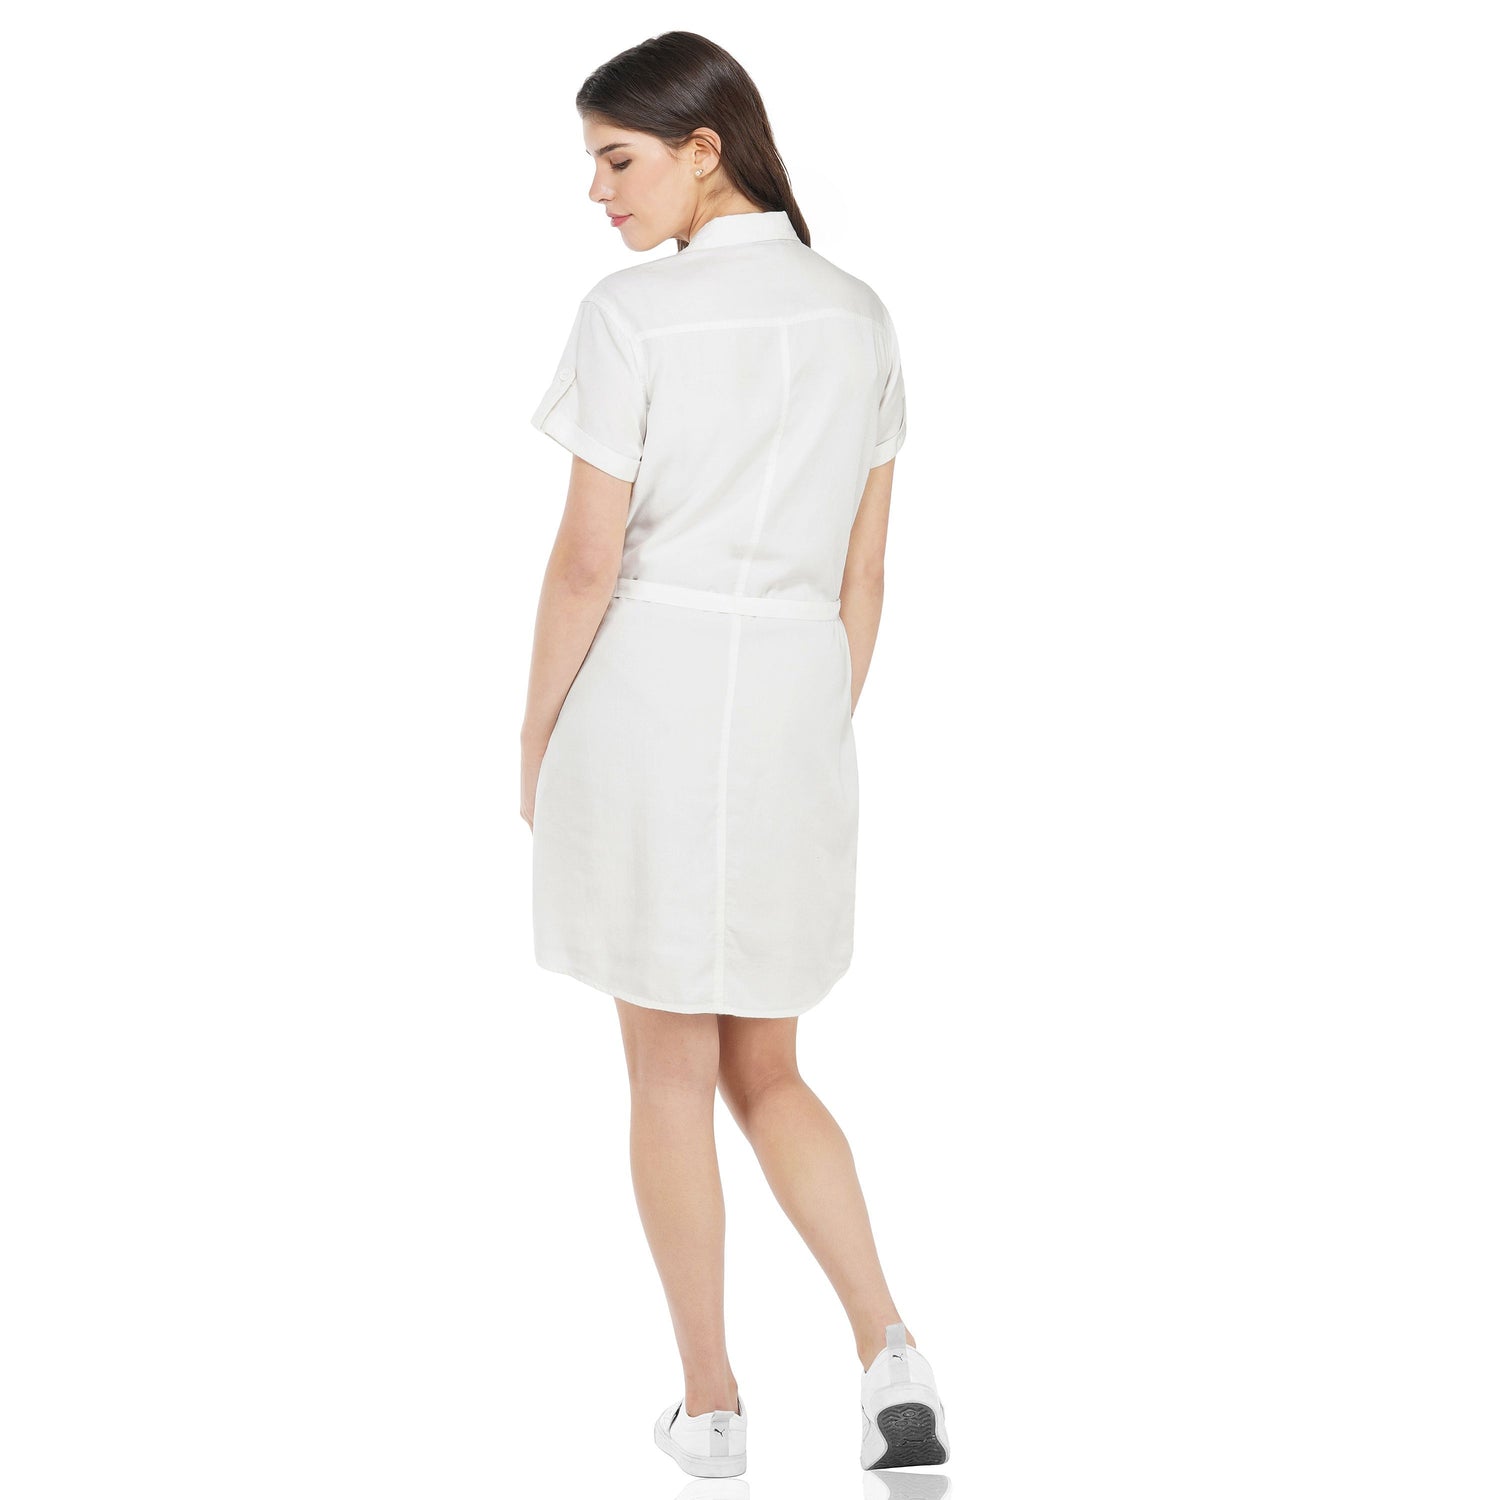 SLAY. Women's White Wrinkle Resistant A-line Short Dress in Tencel-clothing-to-slay.myshopify.com-Dress